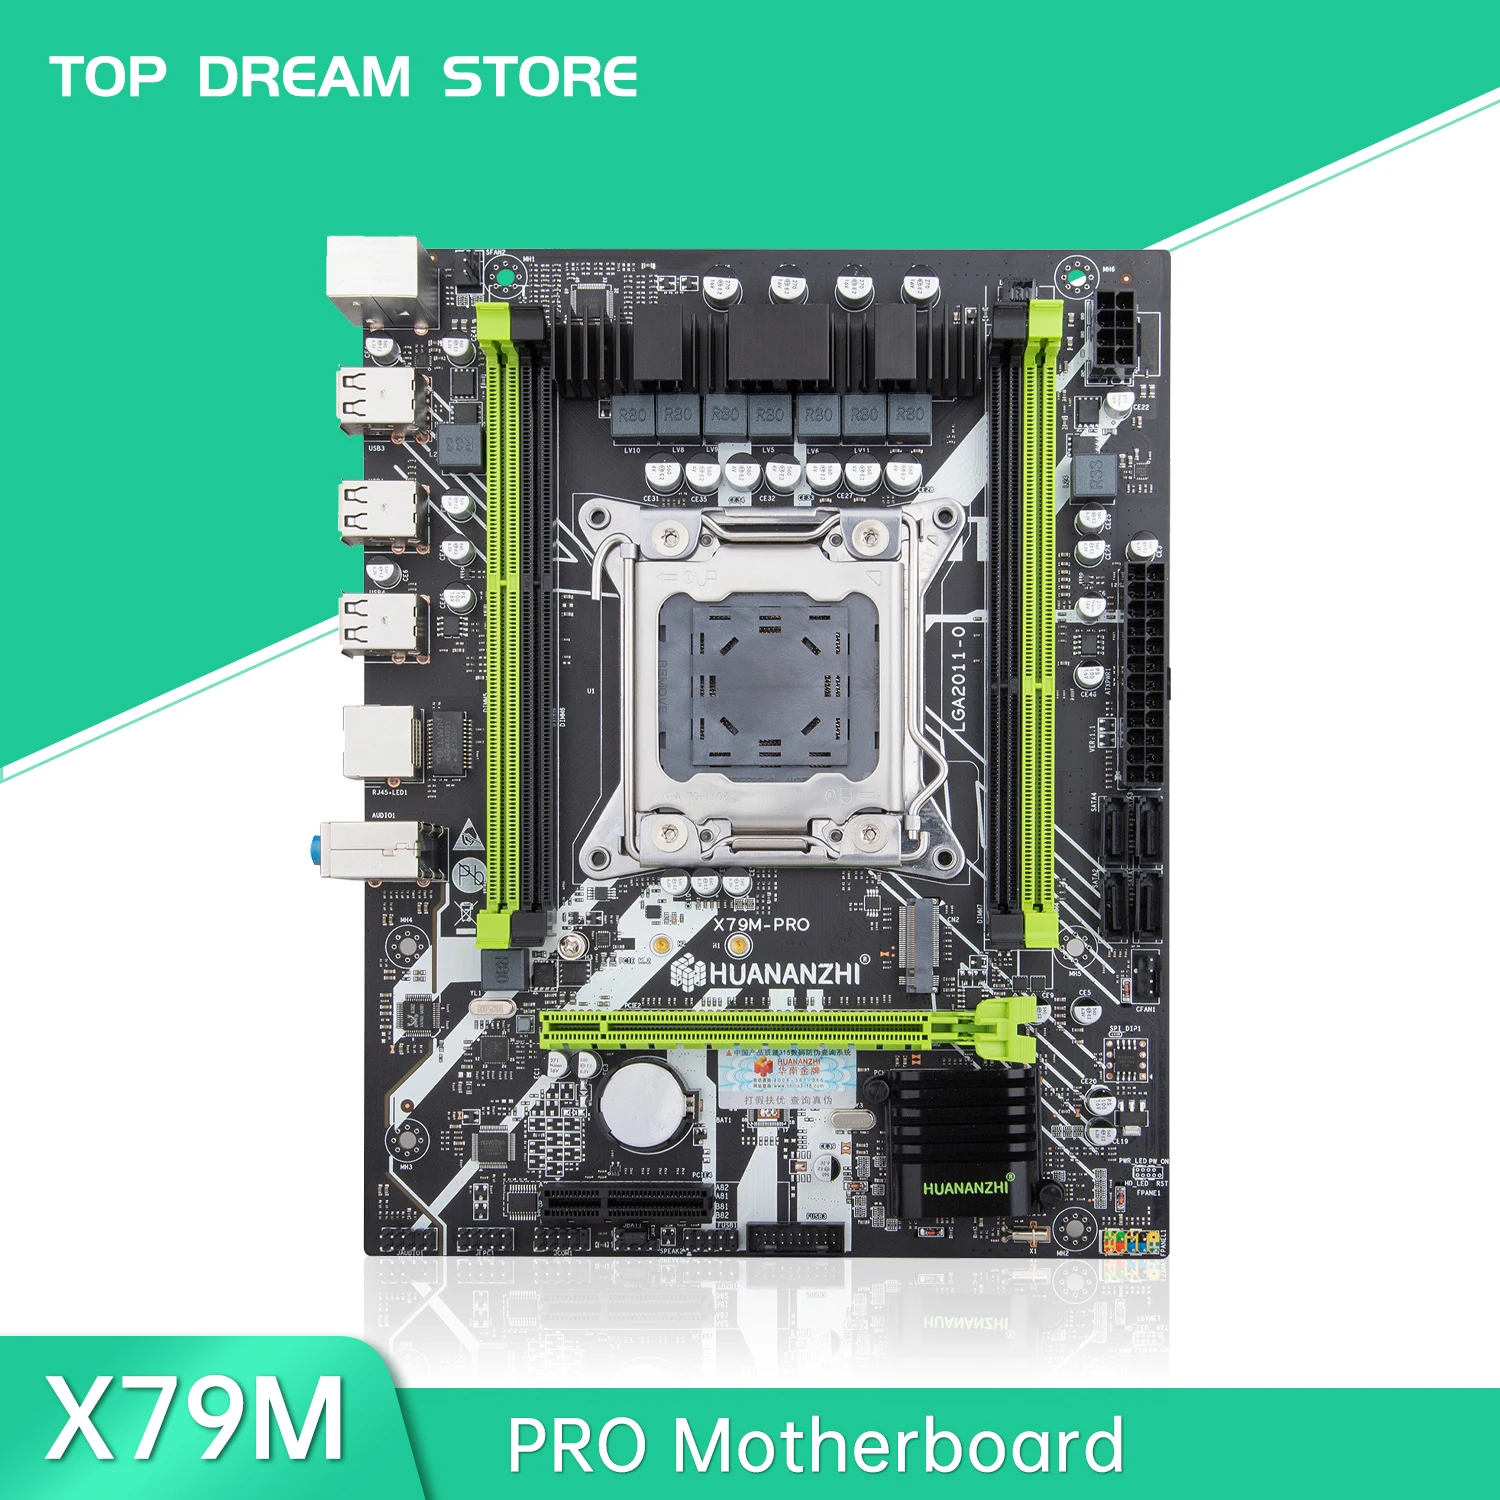 

HUANANZHI X79 M PRO X79 Motherboard Intel XEON E5 LGA2011 All Series DDR3 RECC Non-ECC Memory supports M.2 USB3.0 SATA